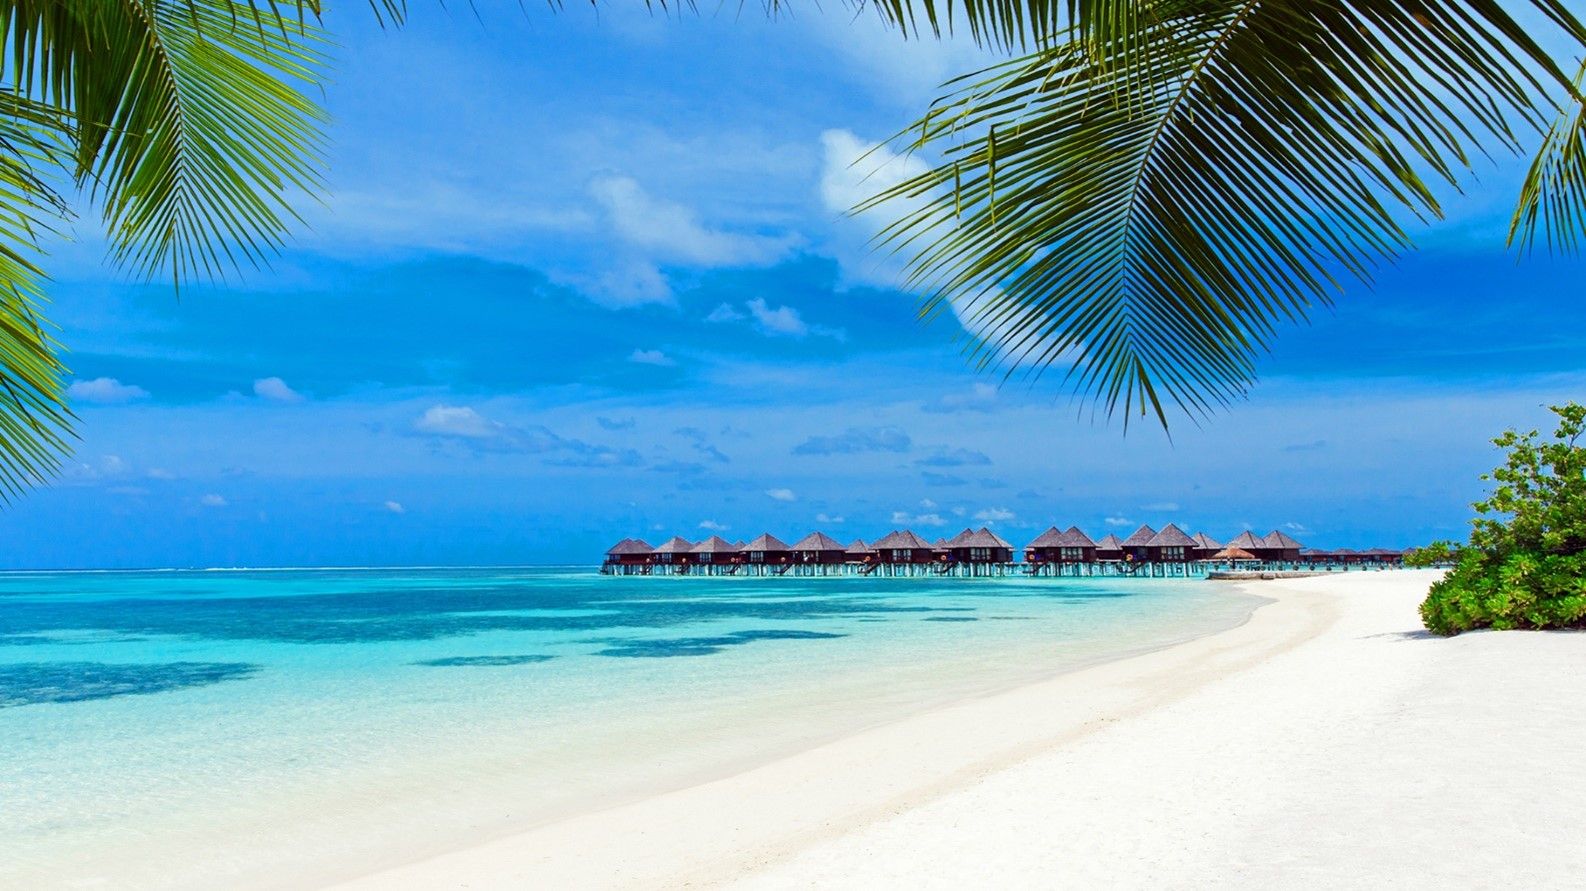 Sejur plaja Maldive, 10 zile - iulie 2022